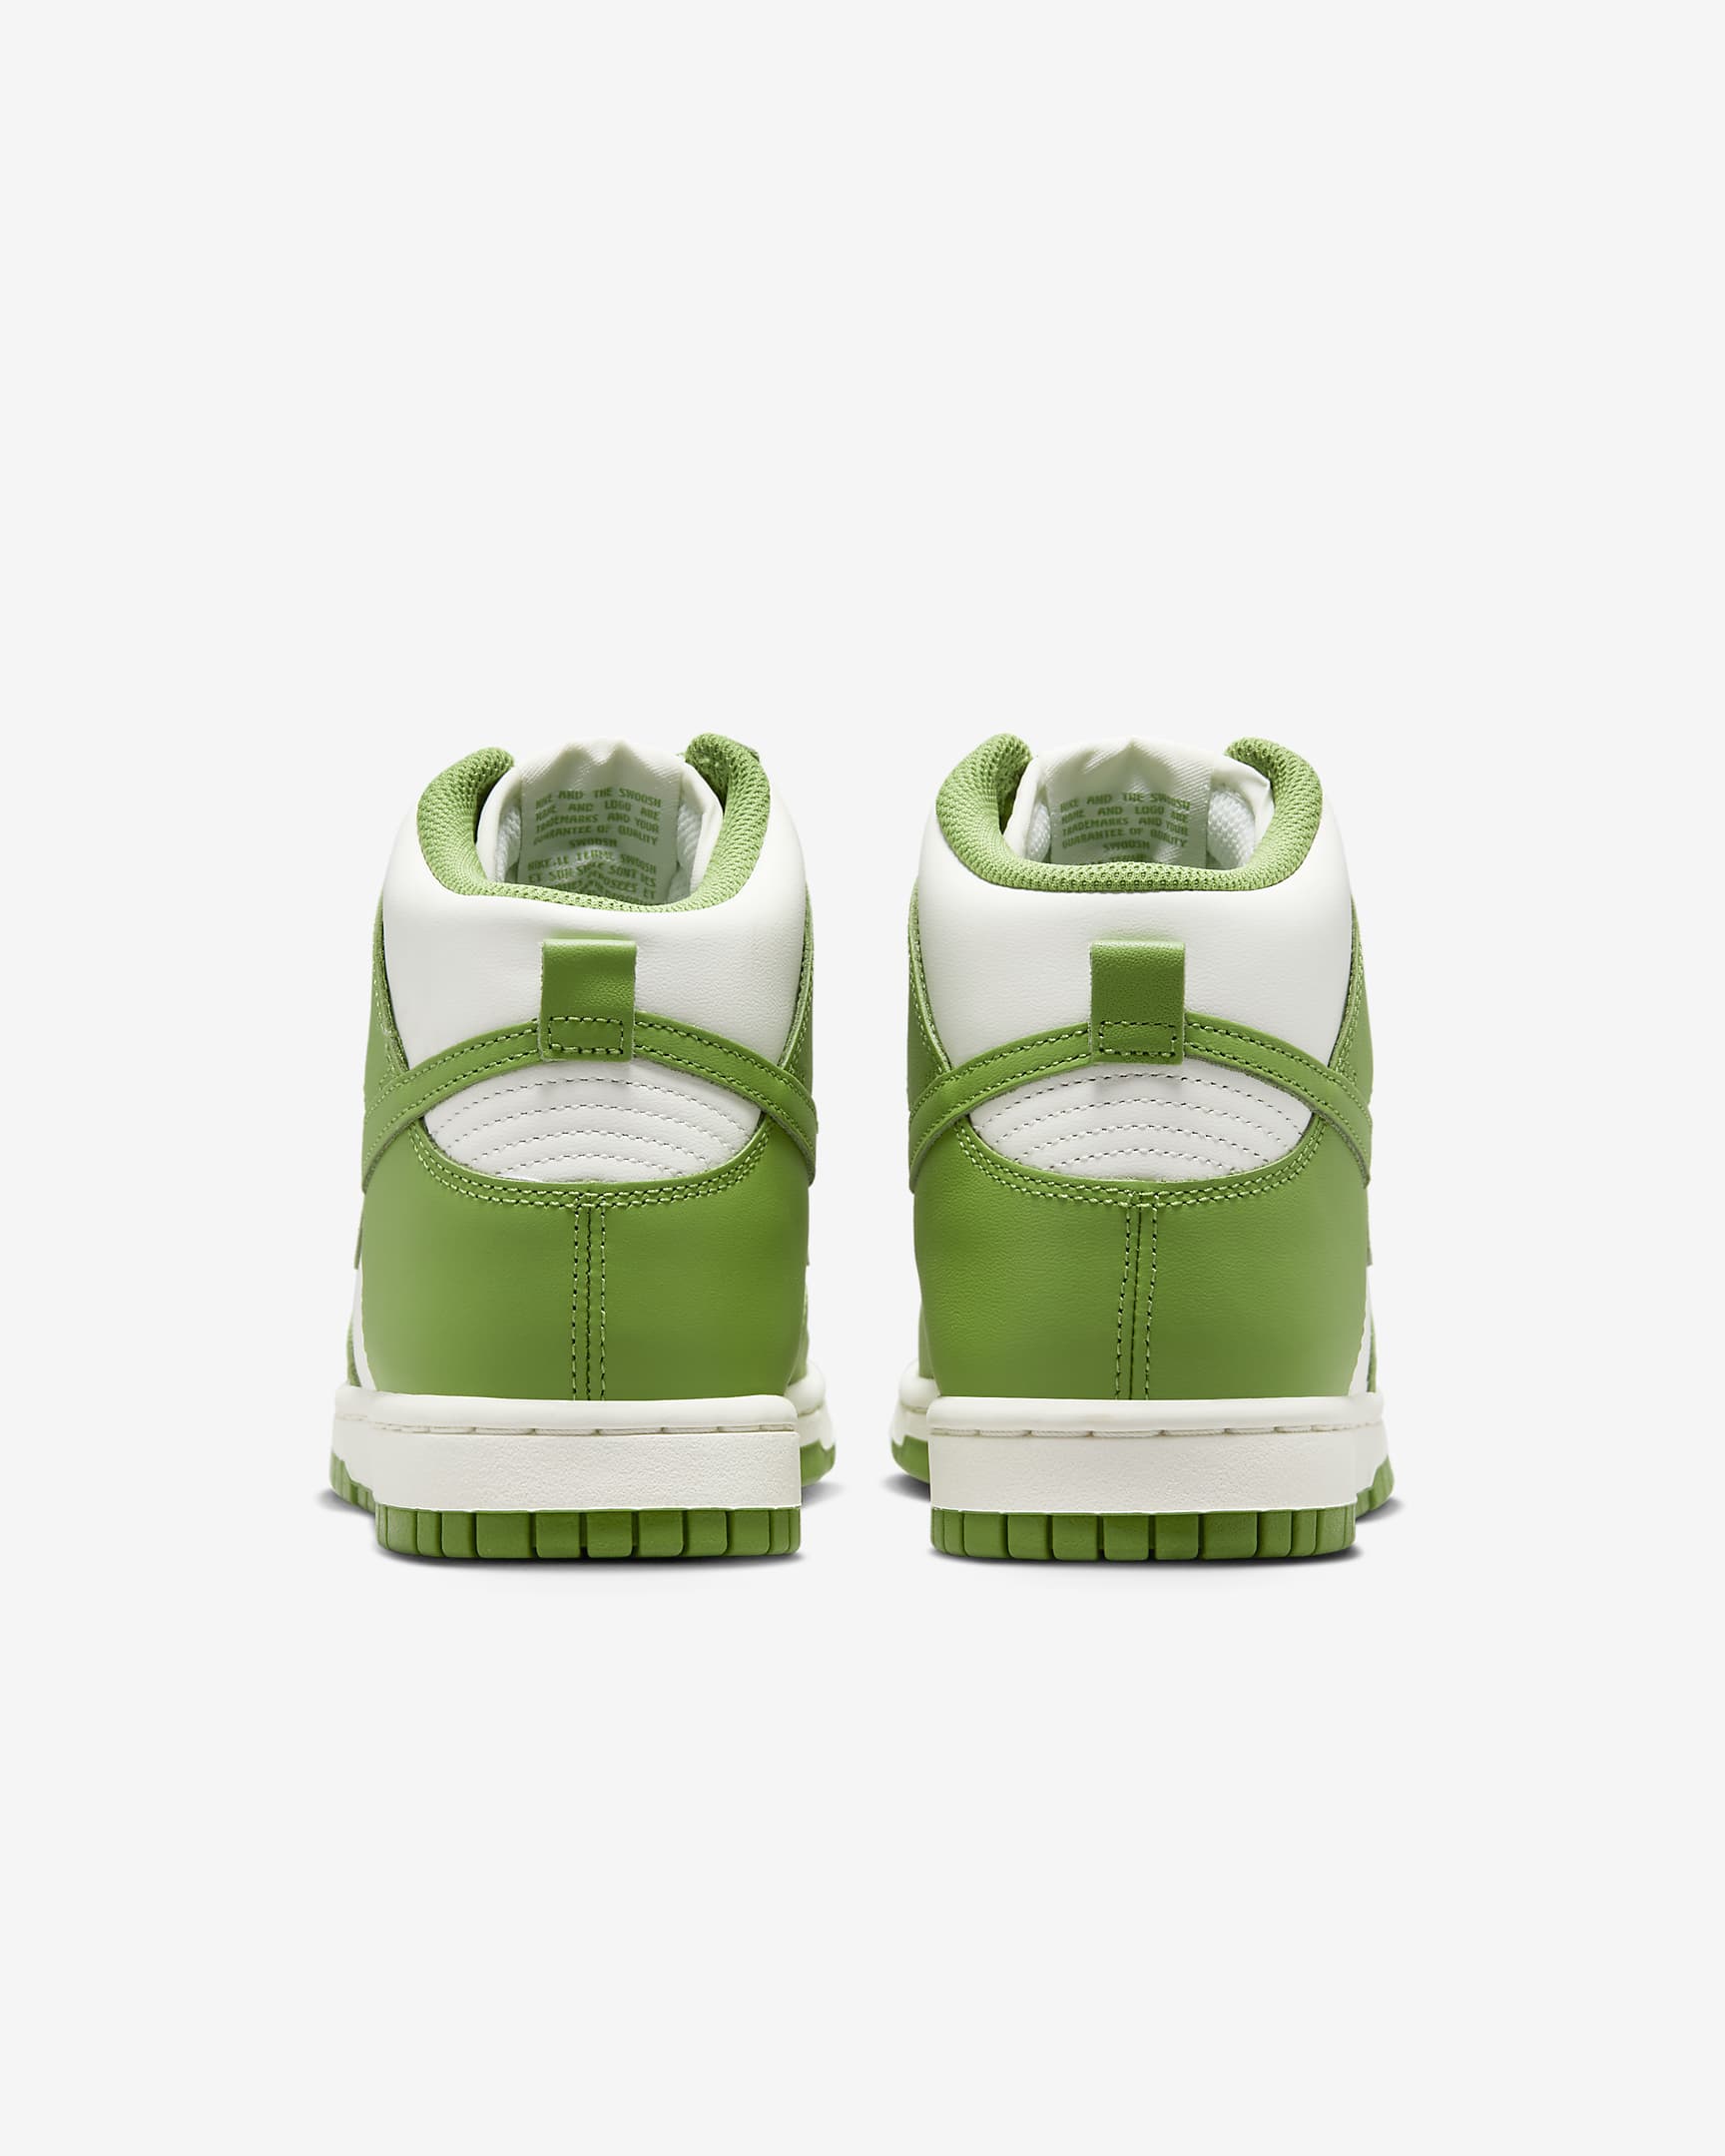 Nike Dunk High Women's Shoes - Chlorophyll/Sail/Chlorophyll